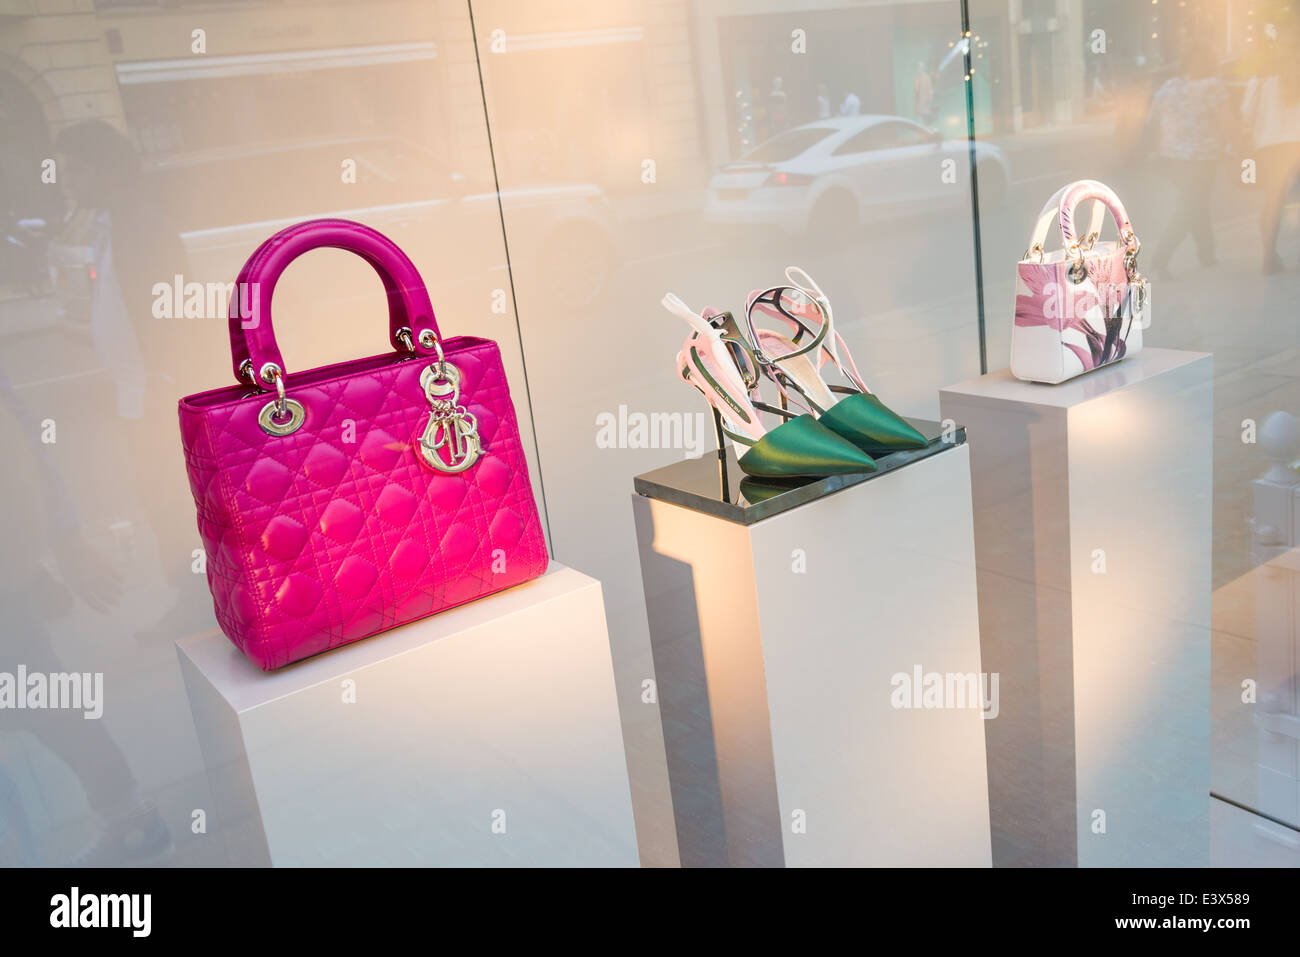 Dior shop window display on Sloane Street, London, UK Stock Photo